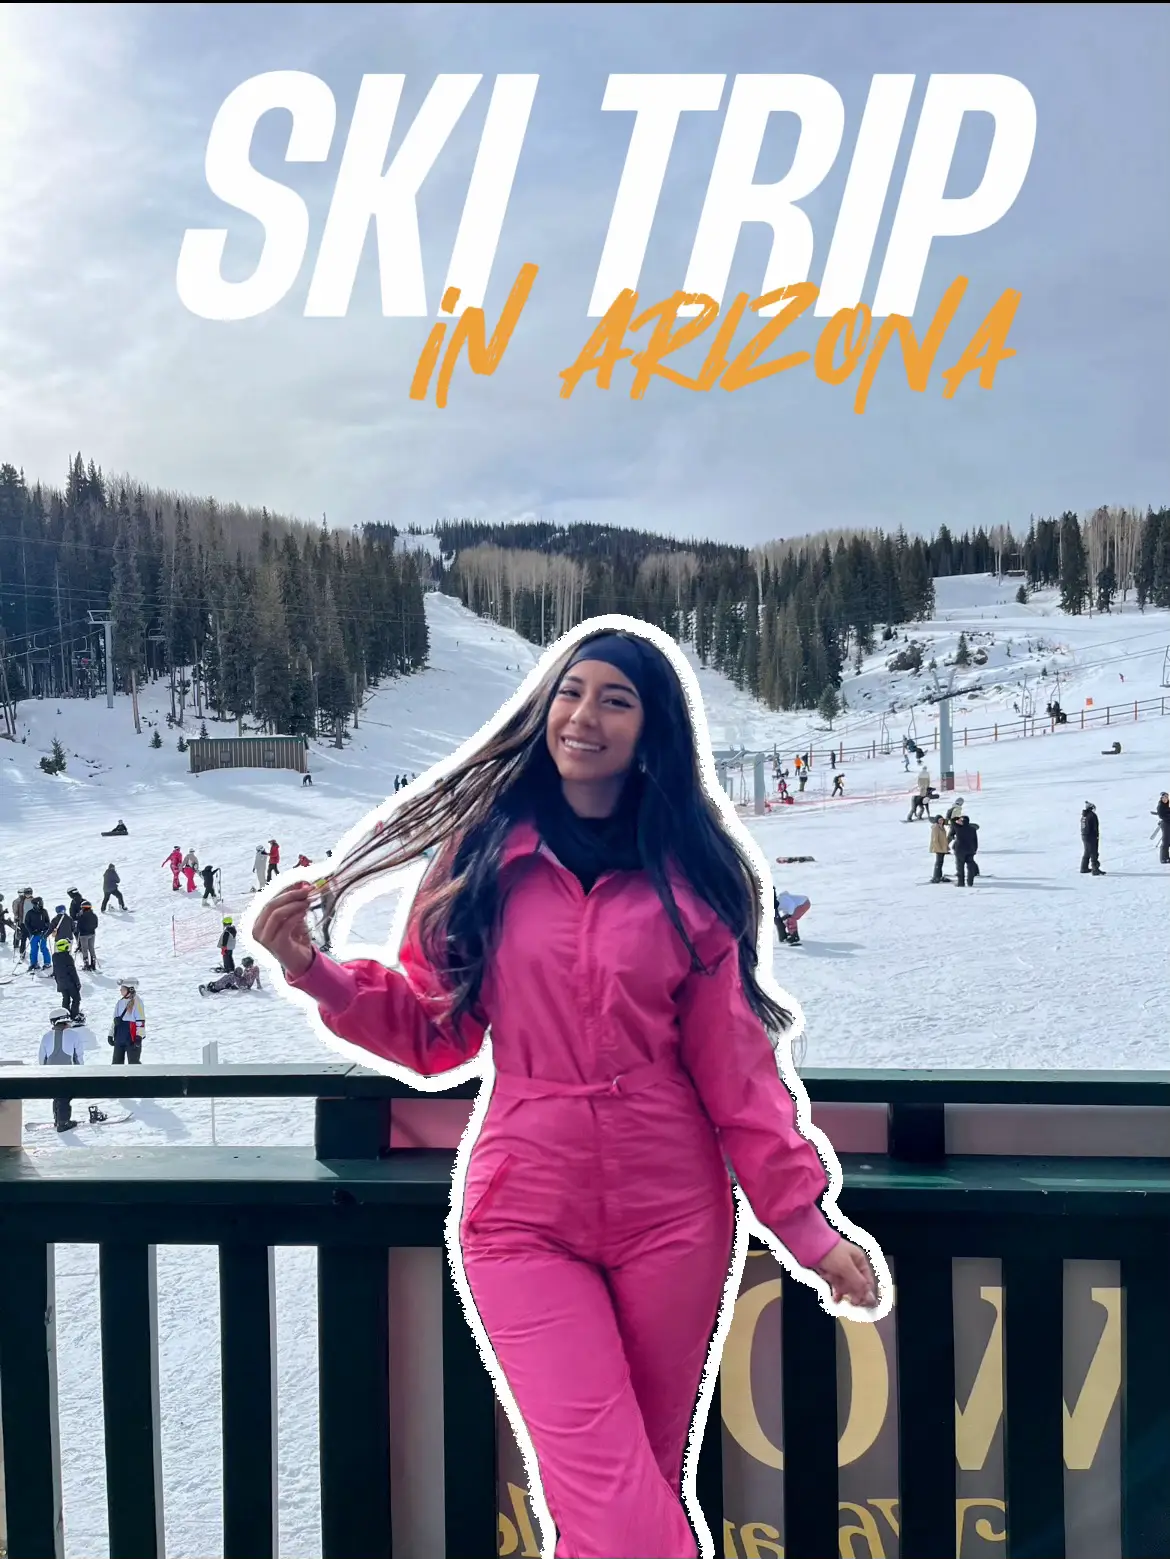 ski suit for women - Lemon8 Search